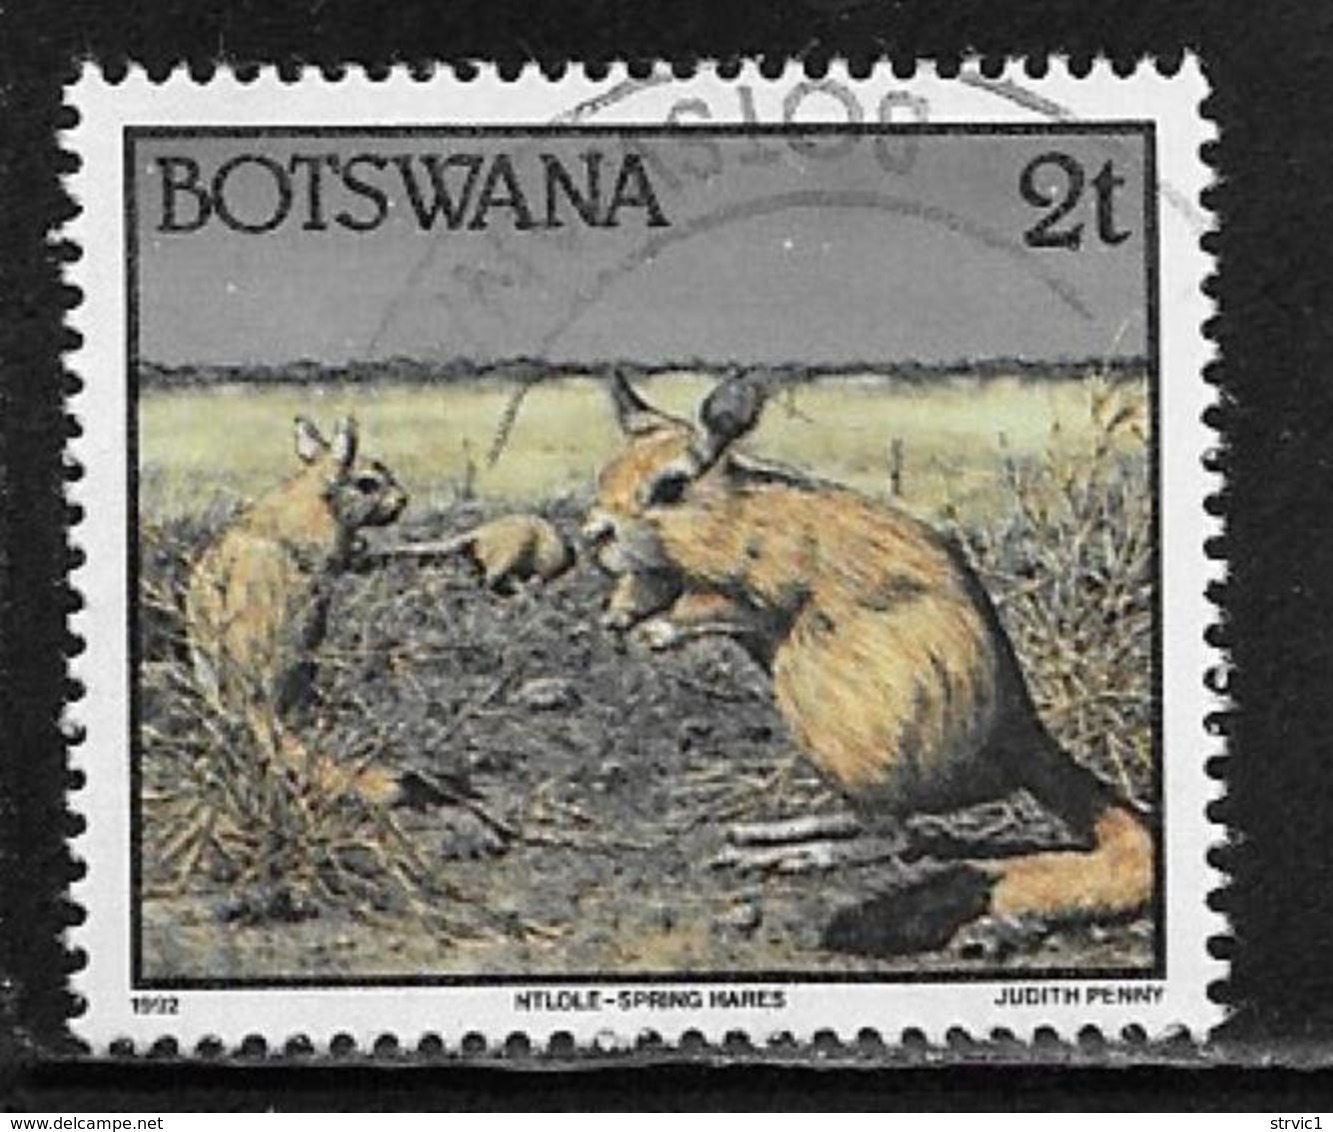 Botswana Scott # 519 Used Spring Hares, 1992 - Botswana (1966-...)